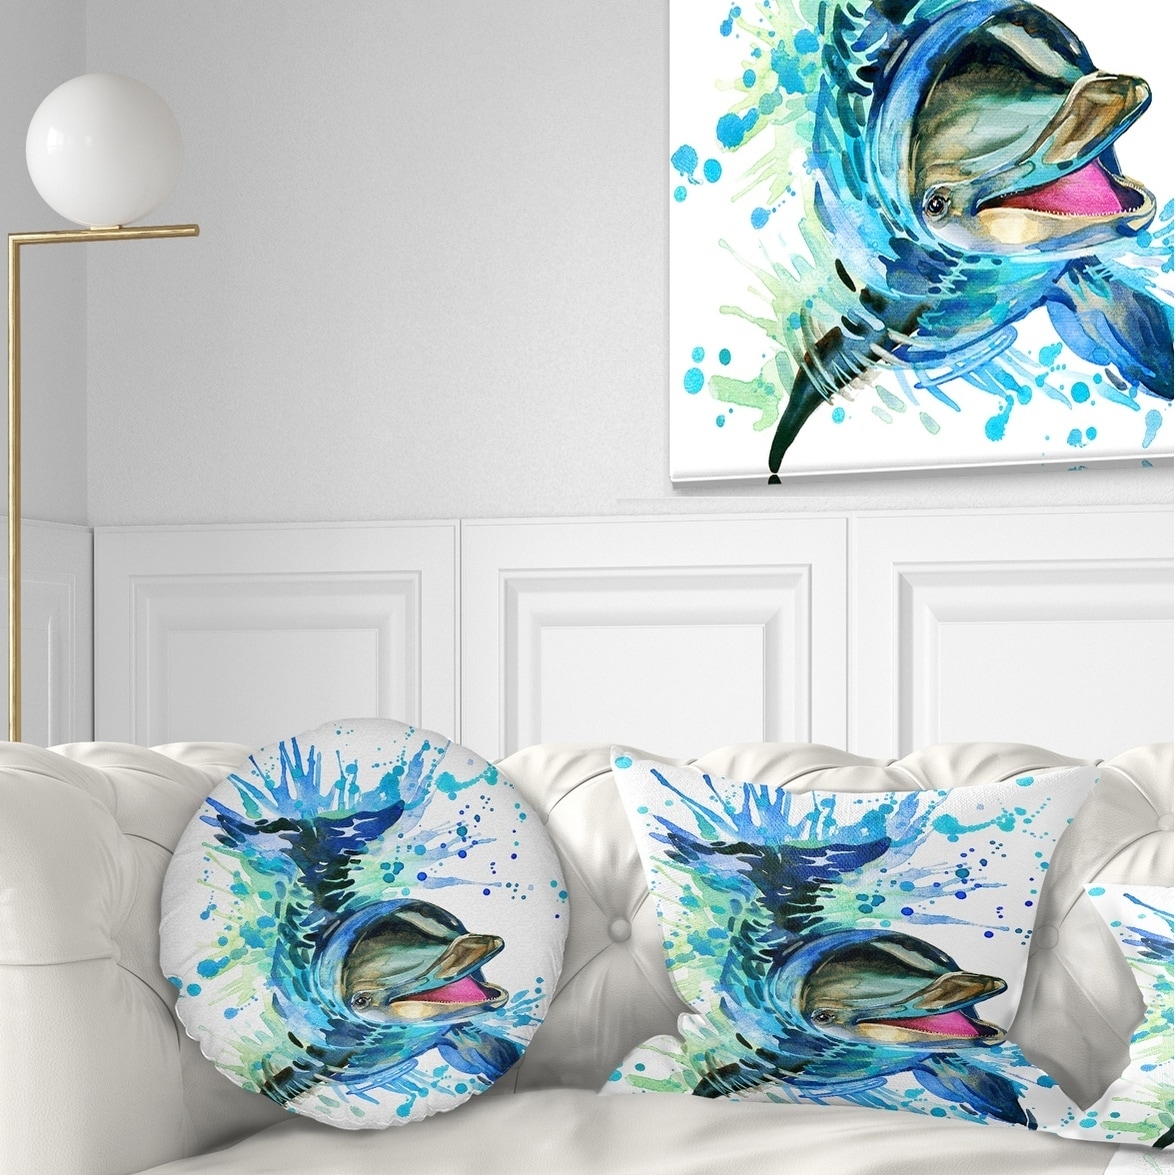 Designart Artistic Watercolor Splash - Abstract Throw Pillow - 18x18, Size: 18 x 18